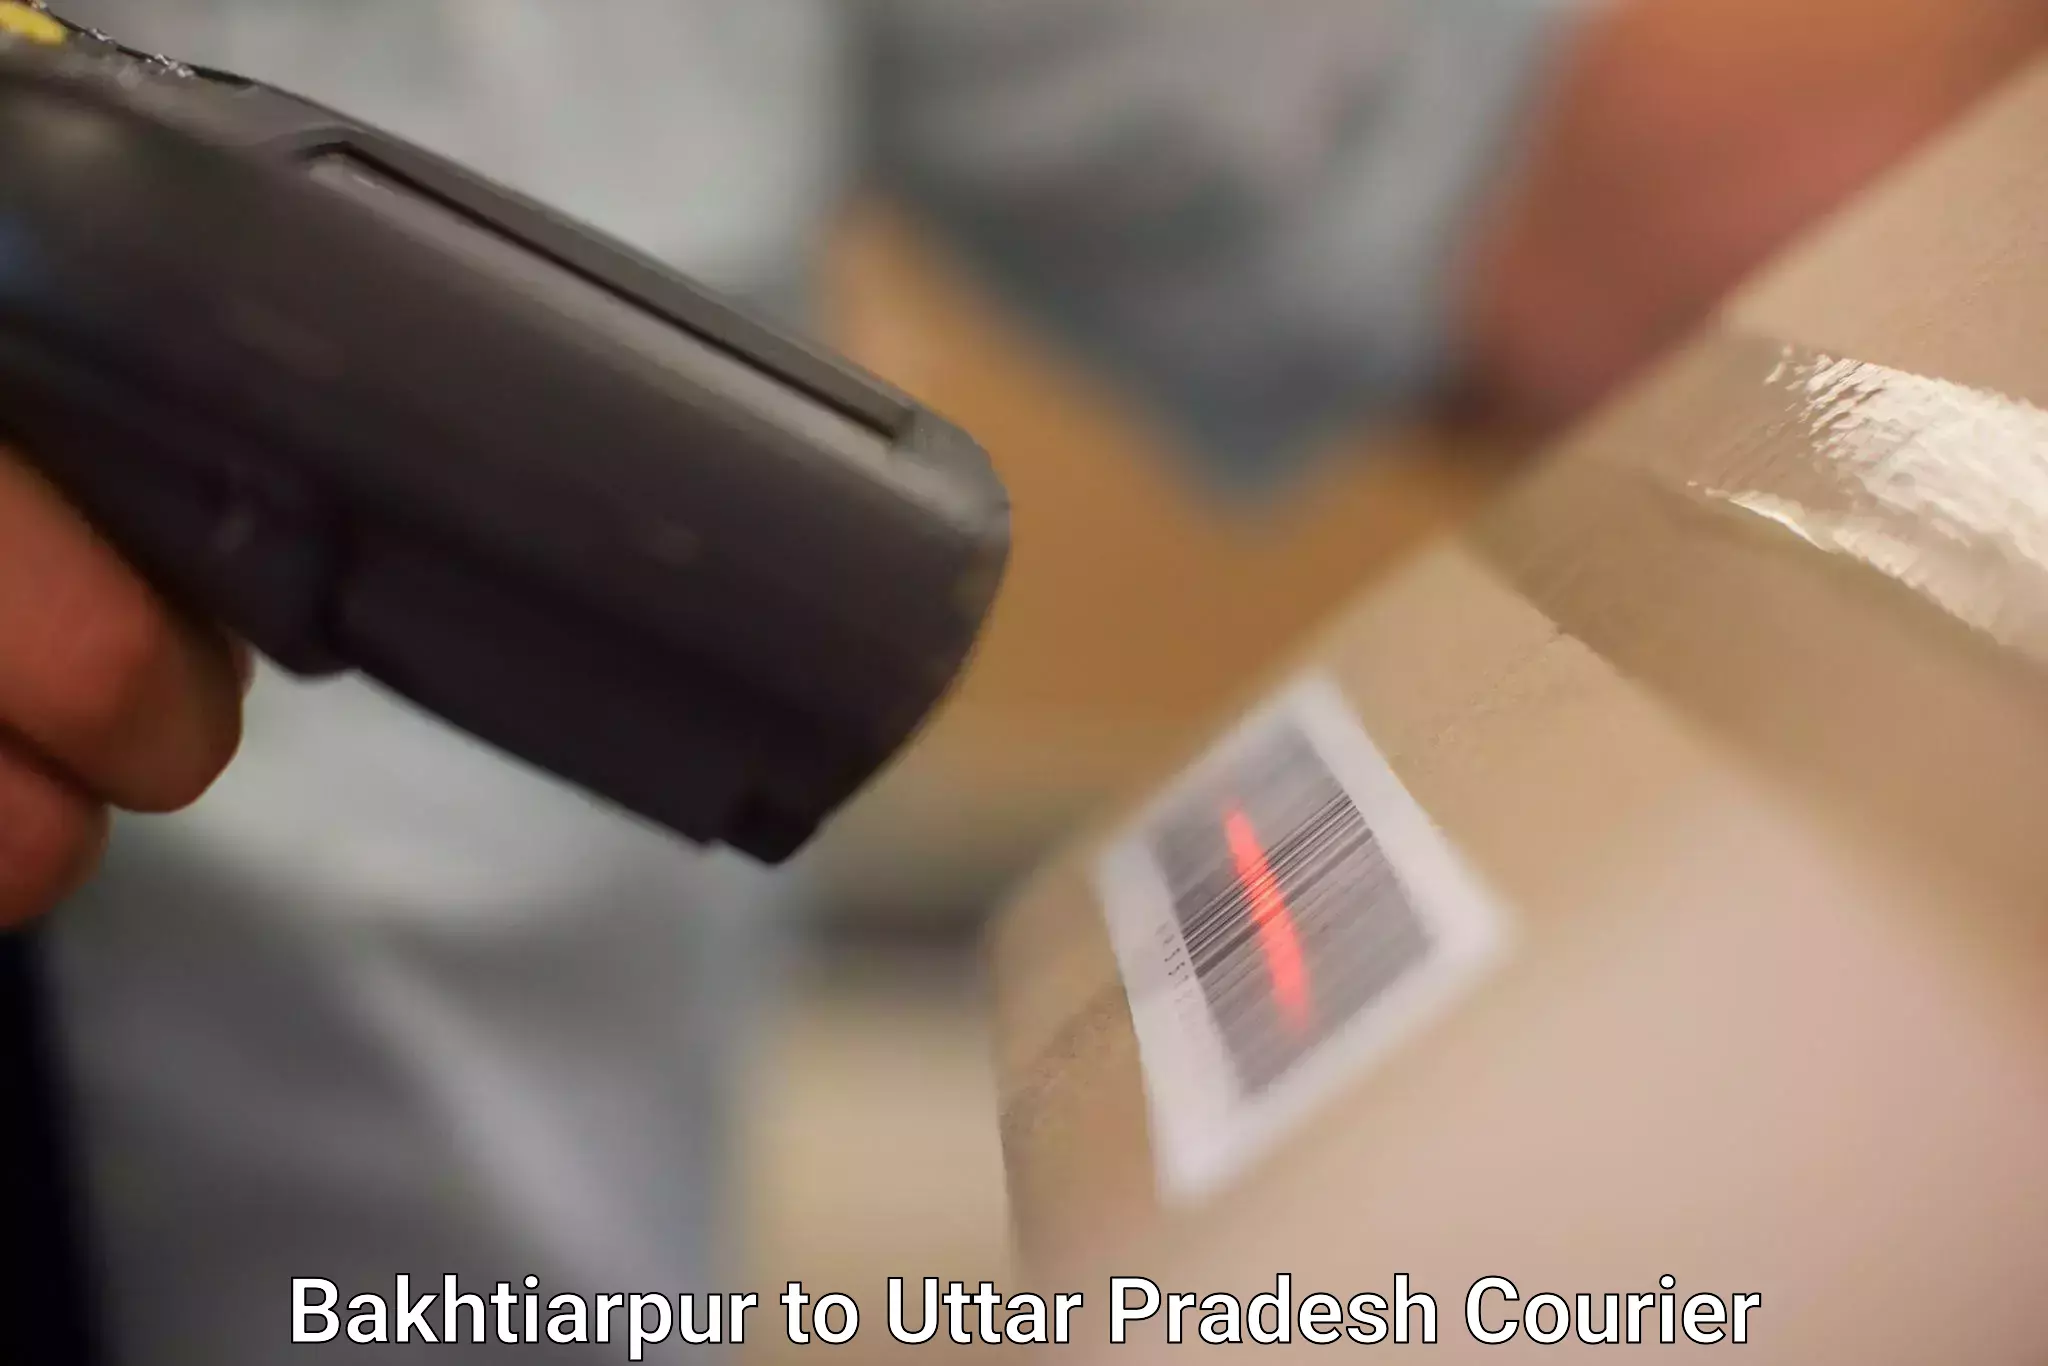 Courier membership in Bakhtiarpur to Uttar Pradesh